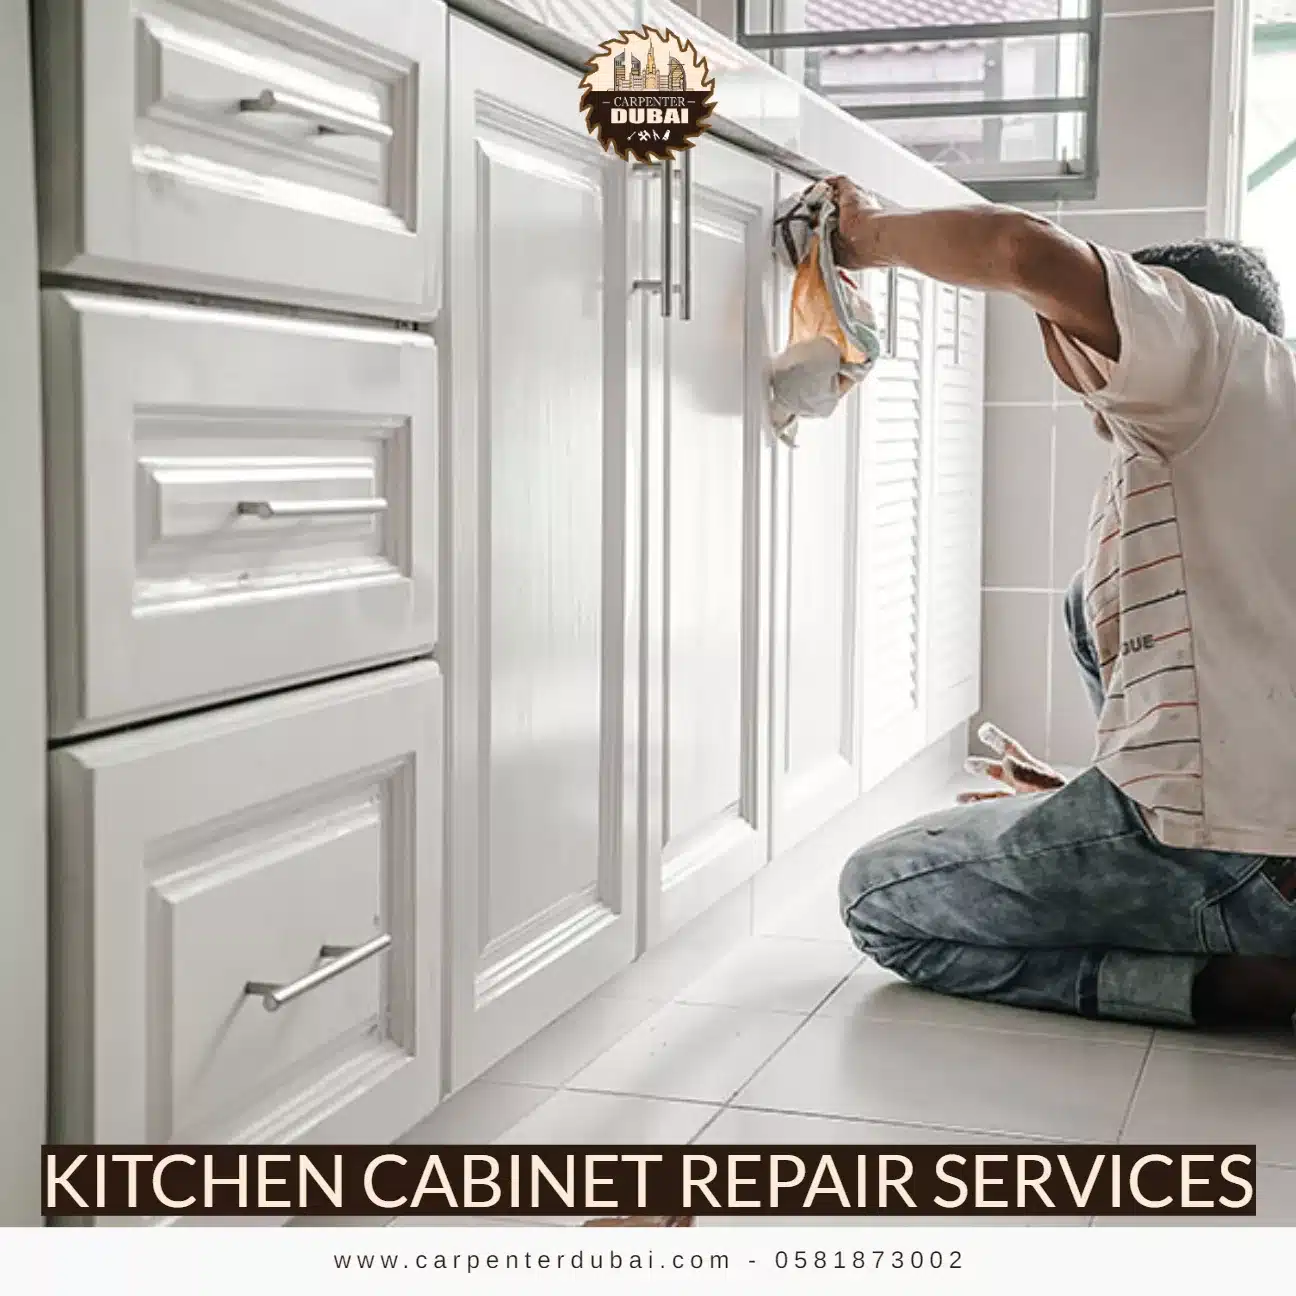 Kitchen Cabinet Repair Services